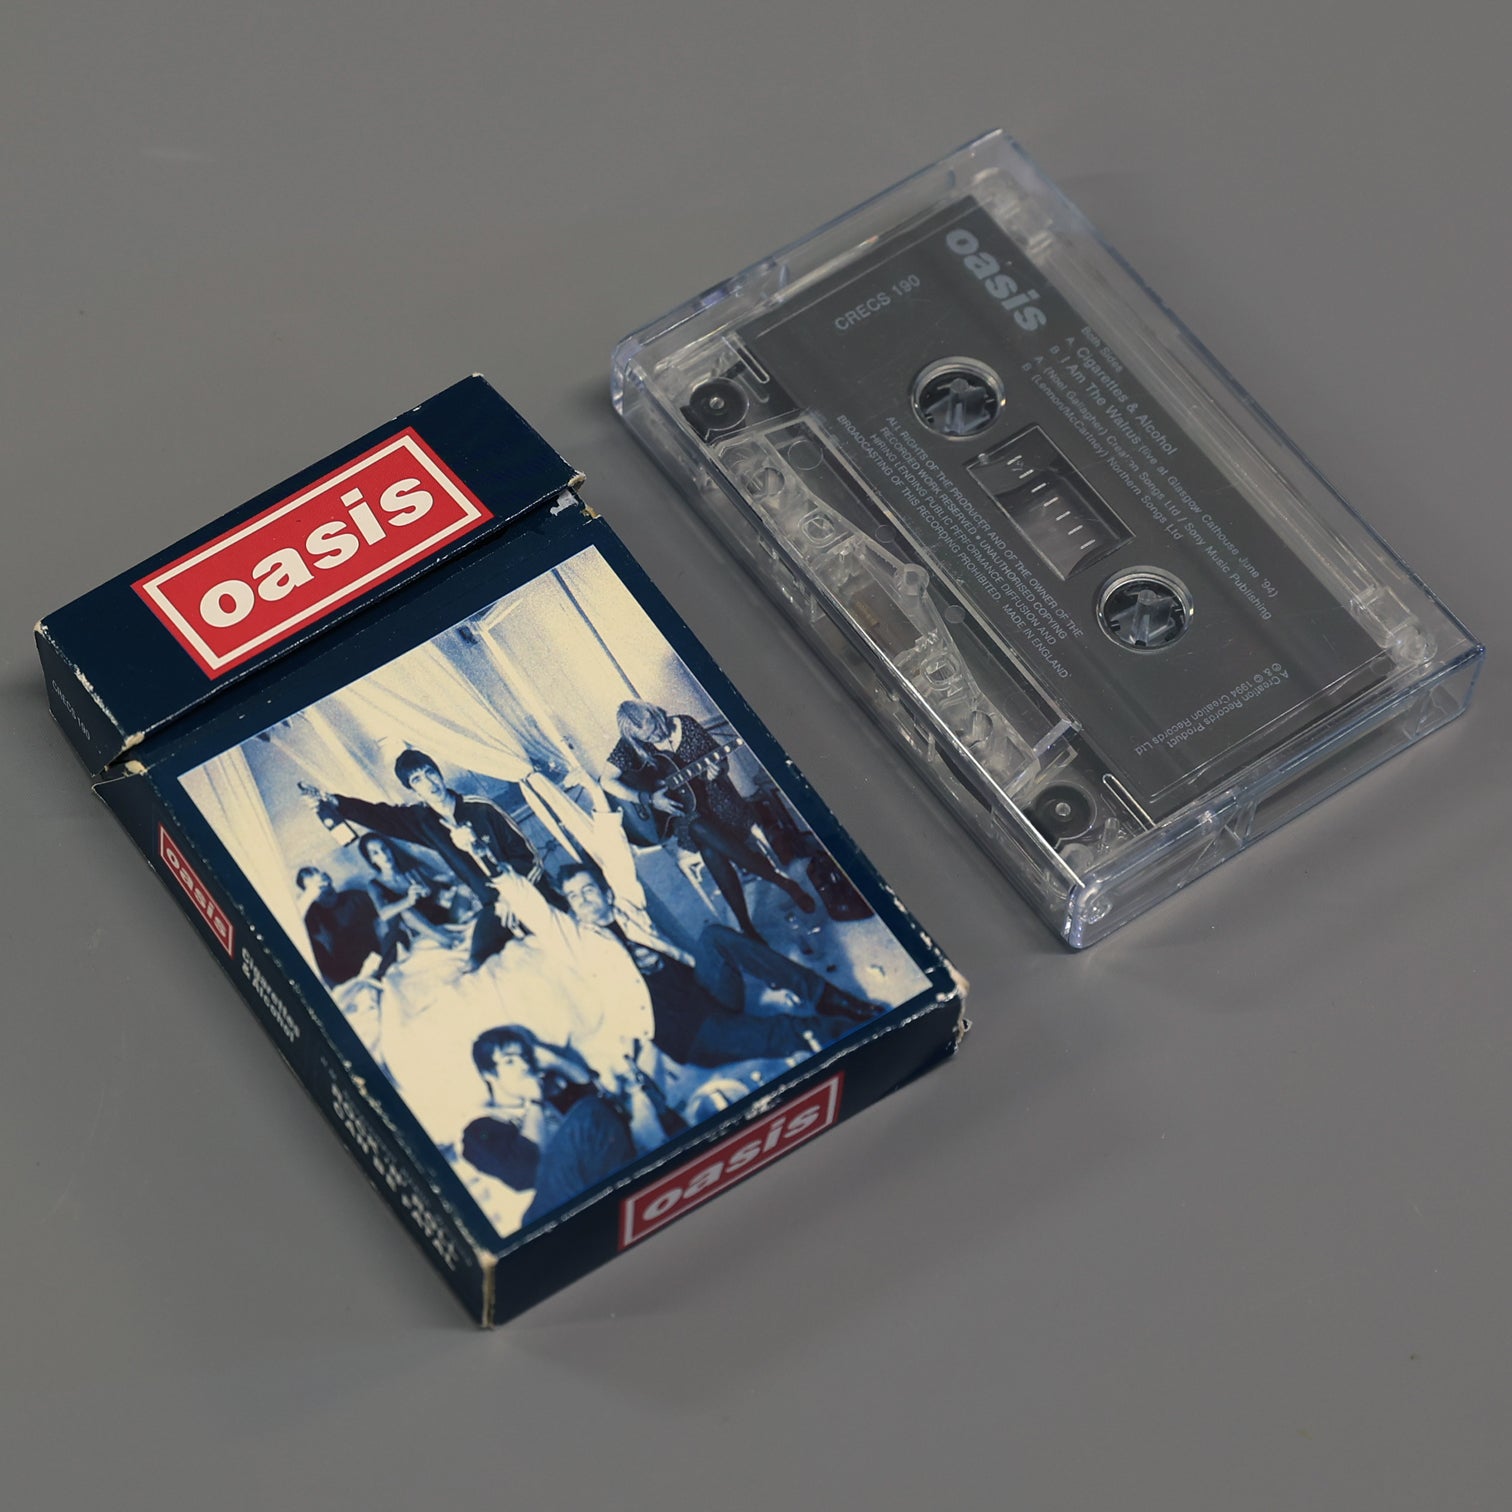 Oasis - Cigarettes & Alcohol Creation Records Cassette - New Item